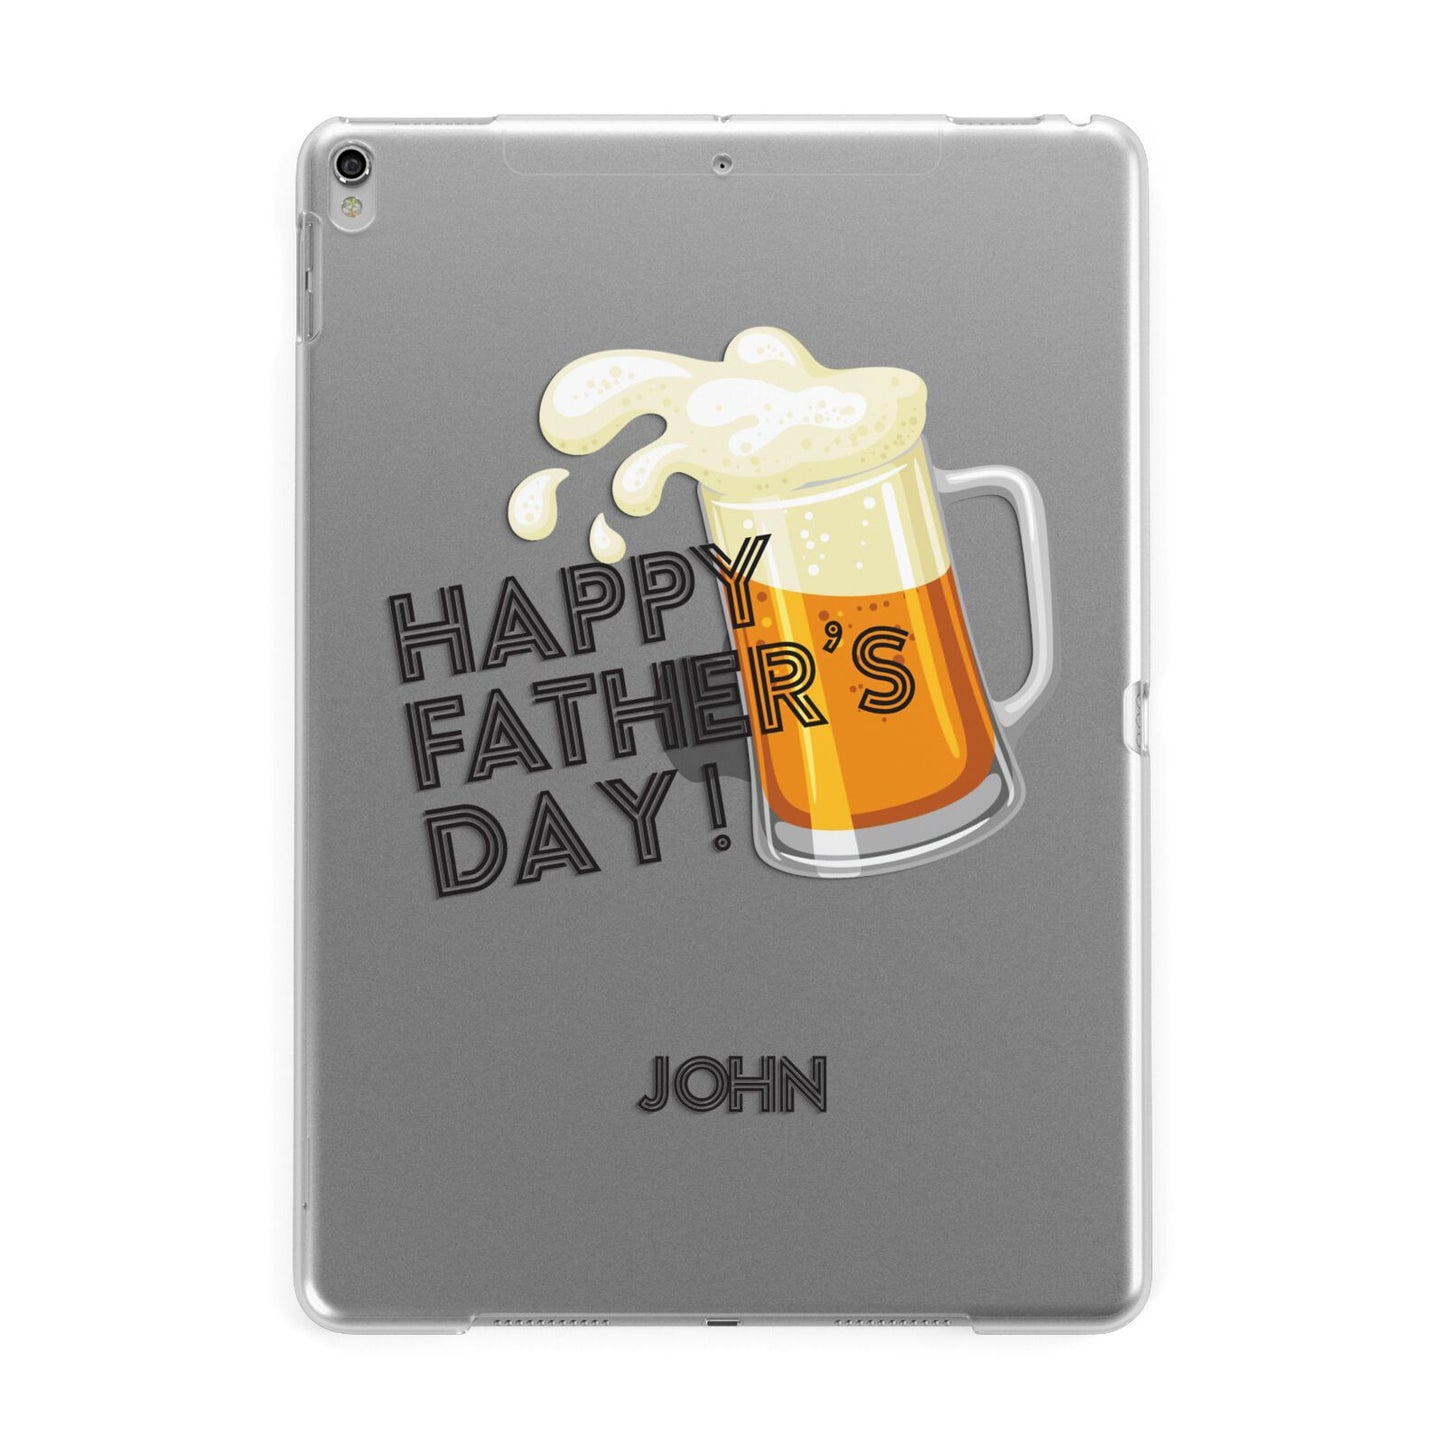 Fathers Day Custom Apple iPad Silver Case